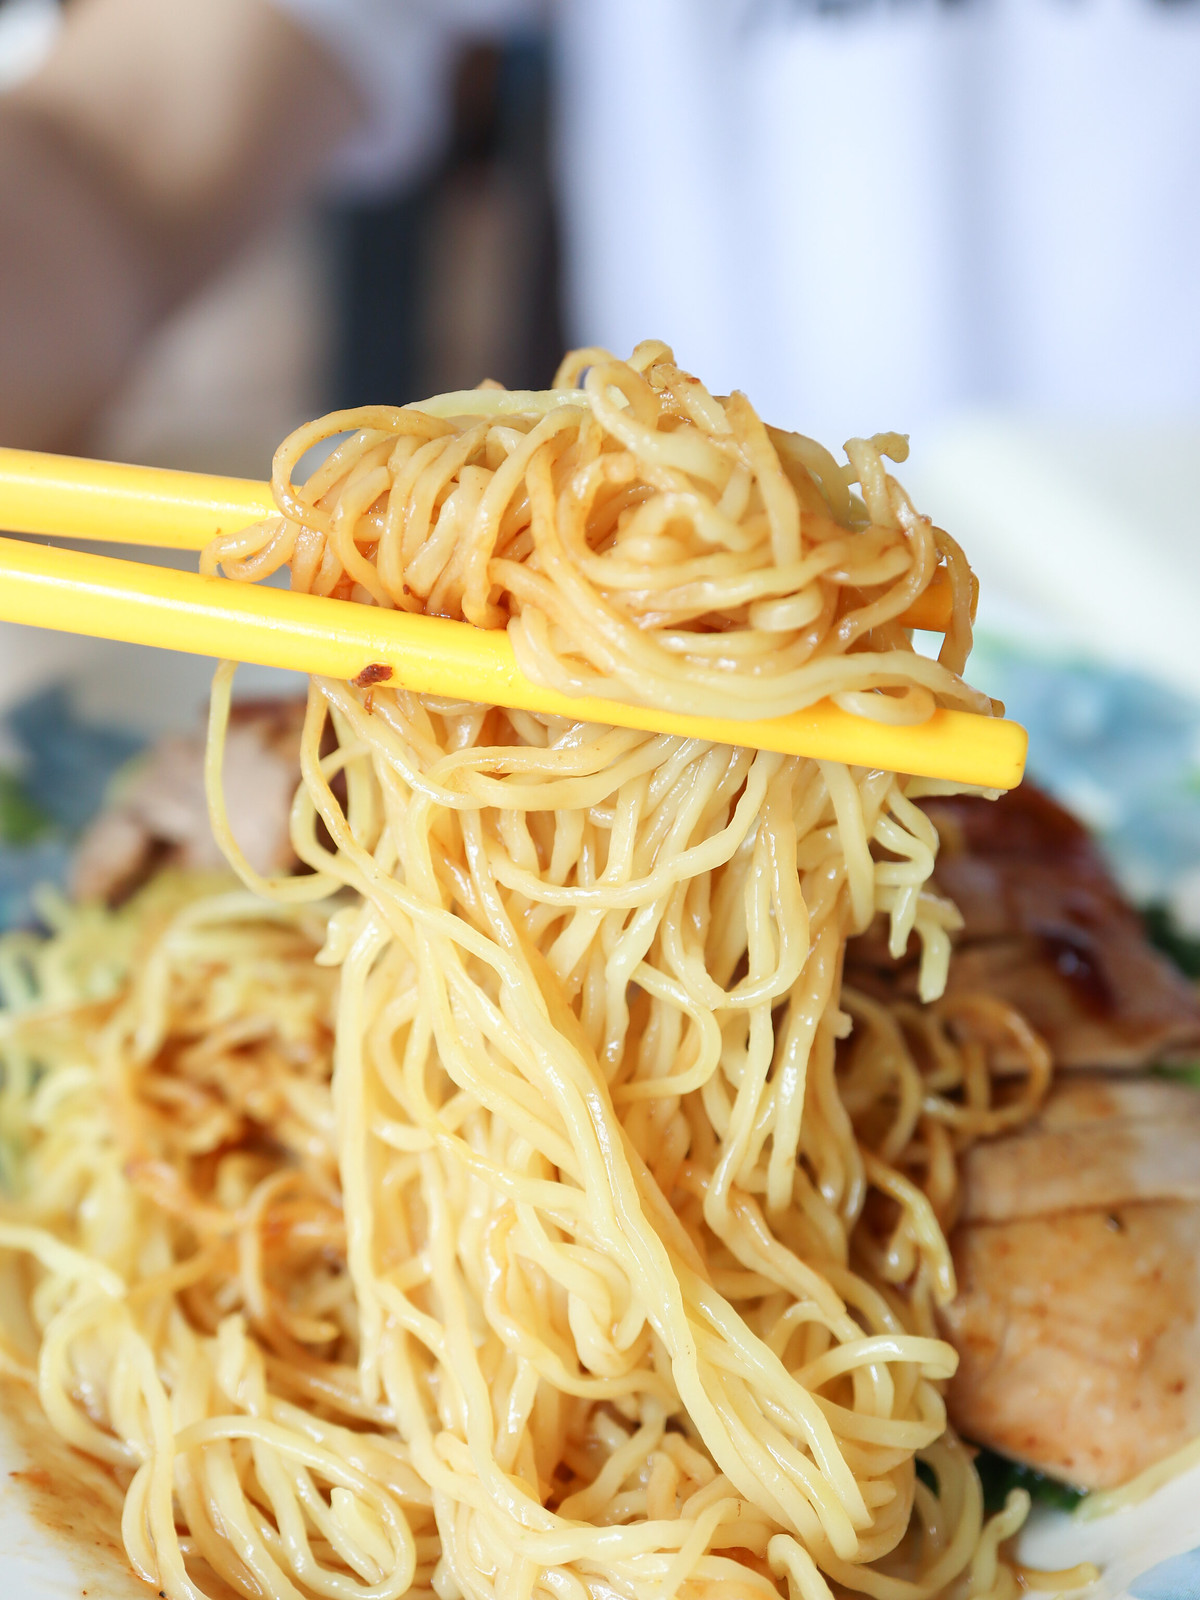 xiang ji roast chicken rice & noodles - roast duck noodle lifting